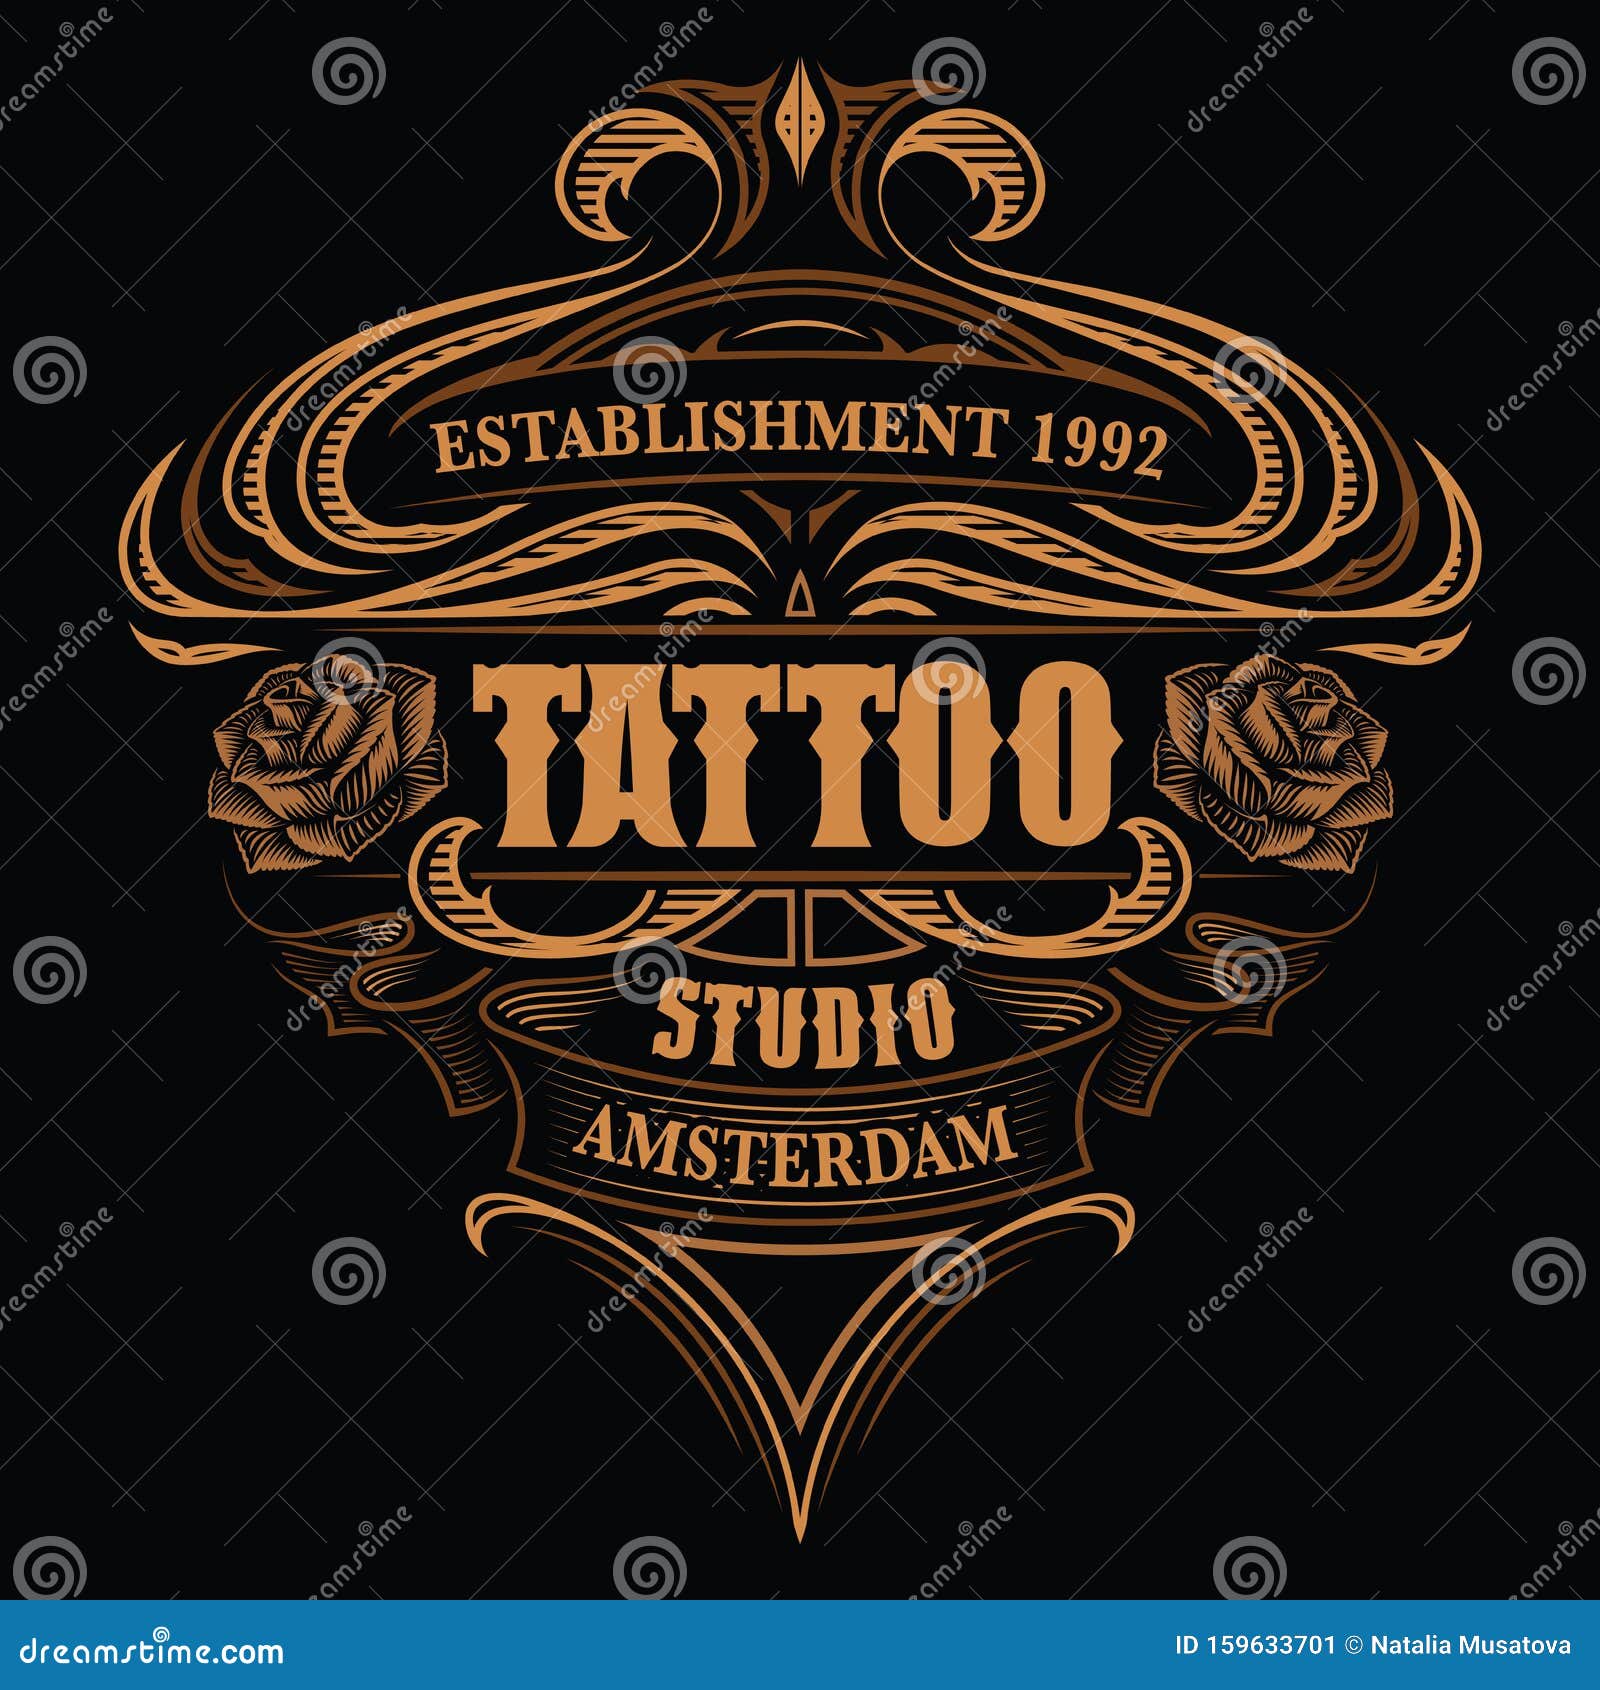 Discover 53 dark arts tattoo studio best  thtantai2